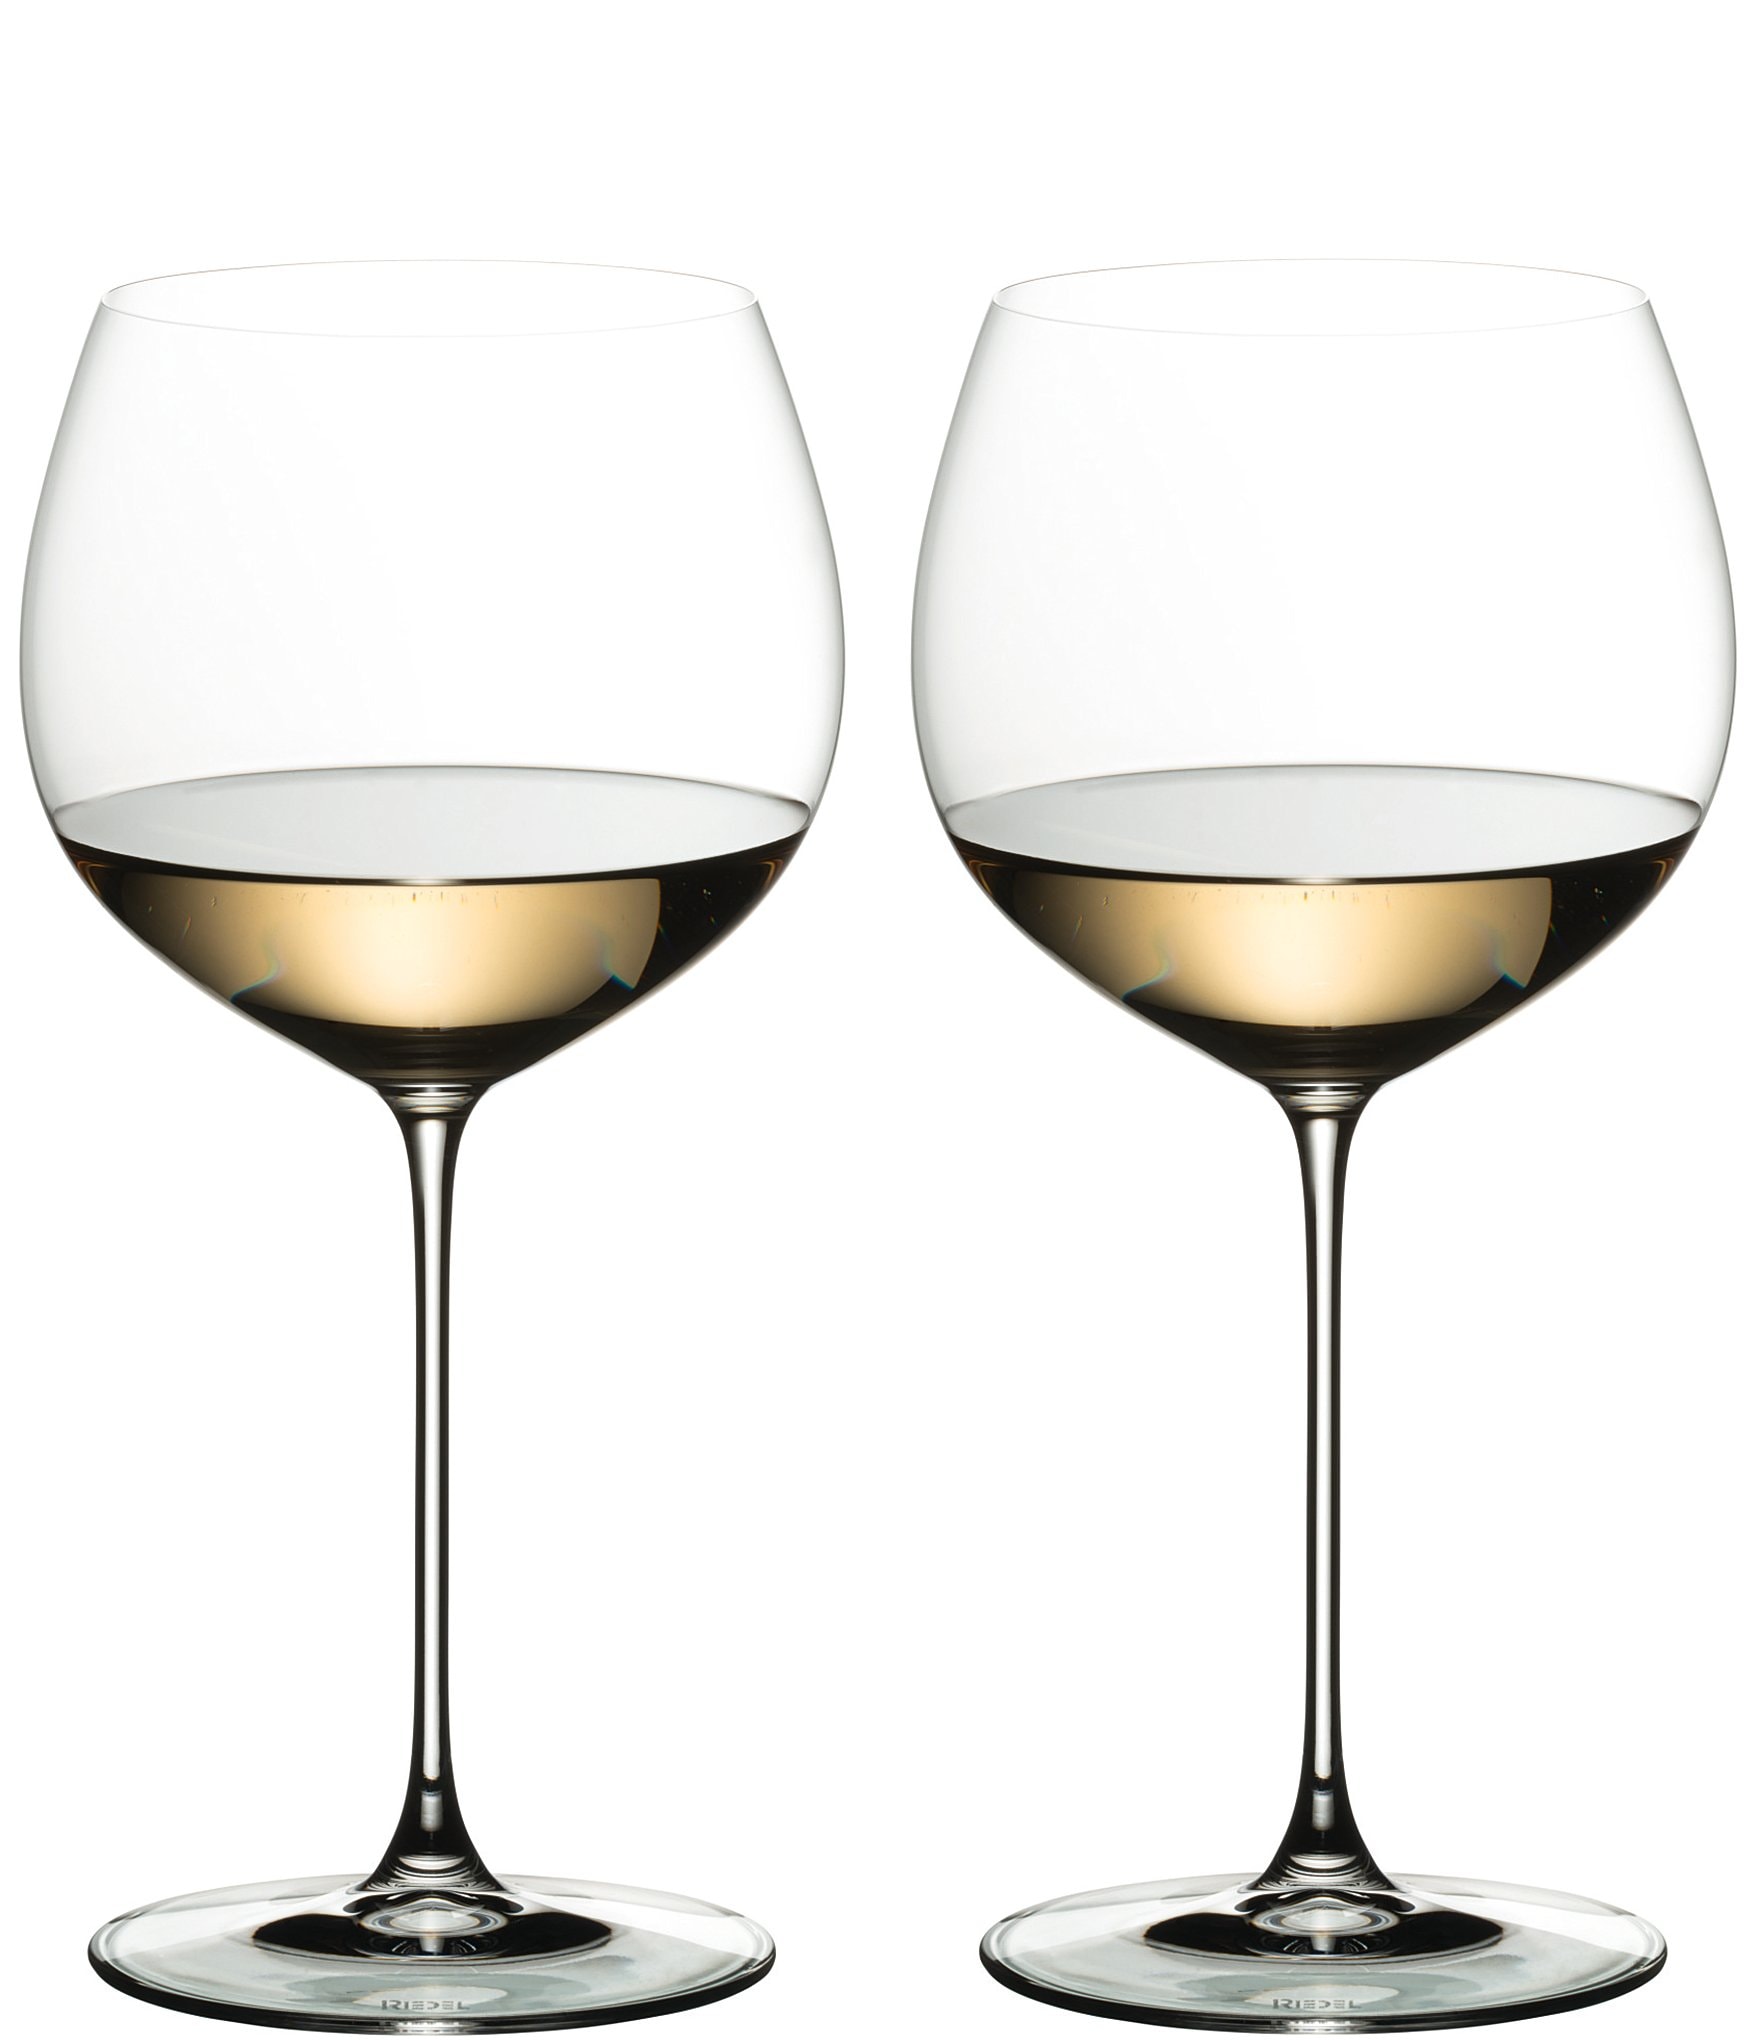 Riedel Veritas Oaked Chardonnay Glasses, Set of 2 | Dillard's